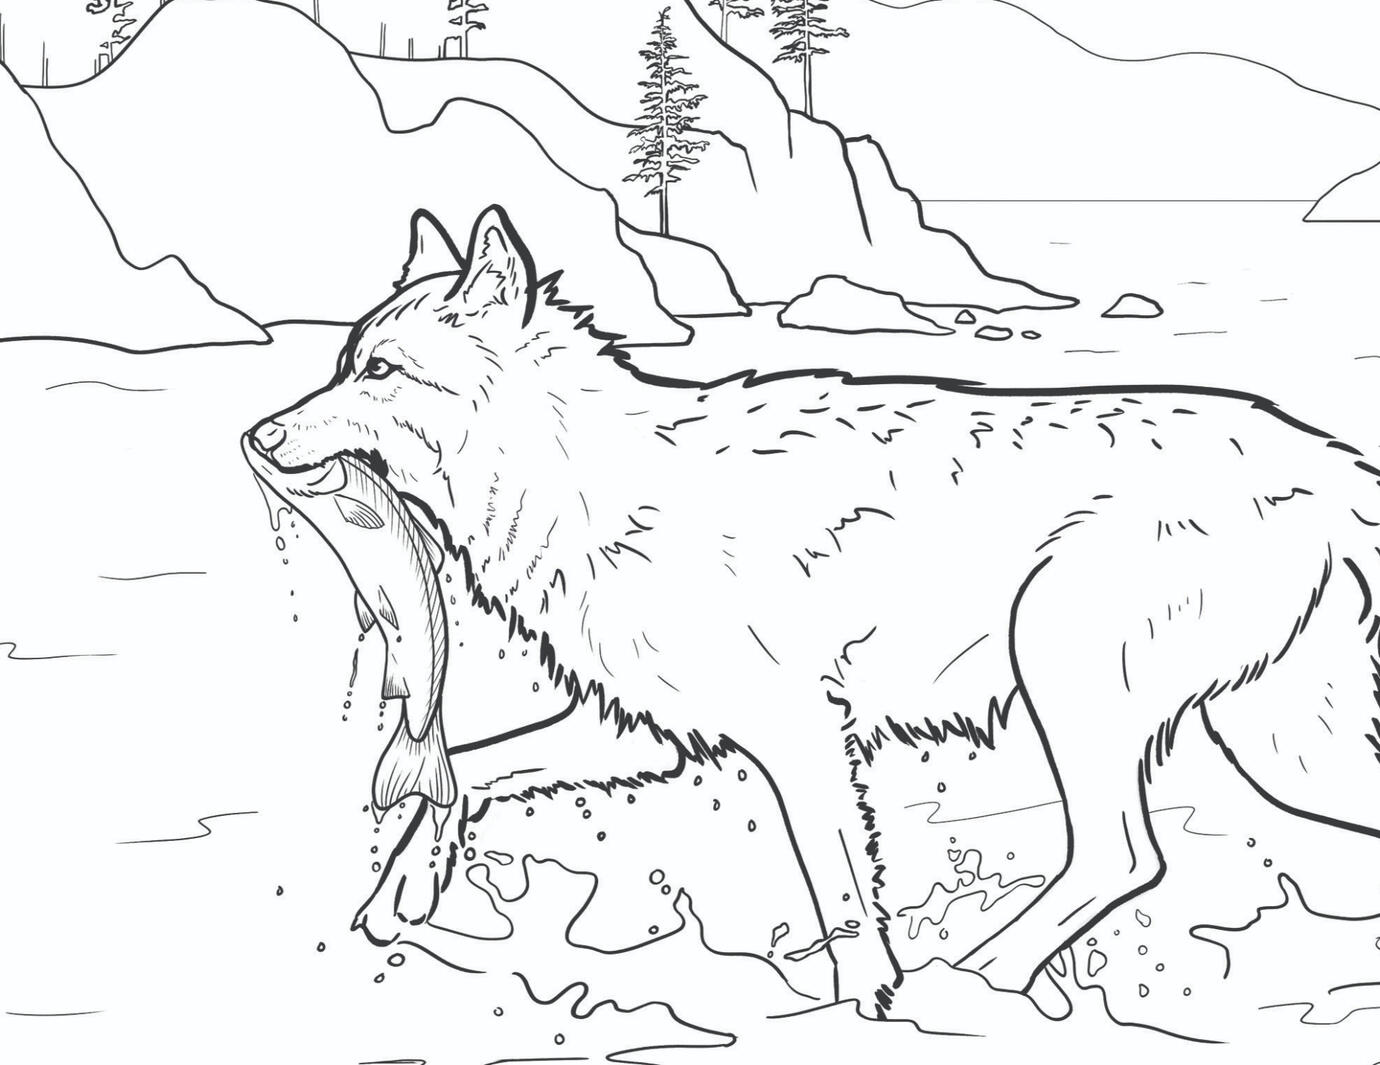 Coastal wolf